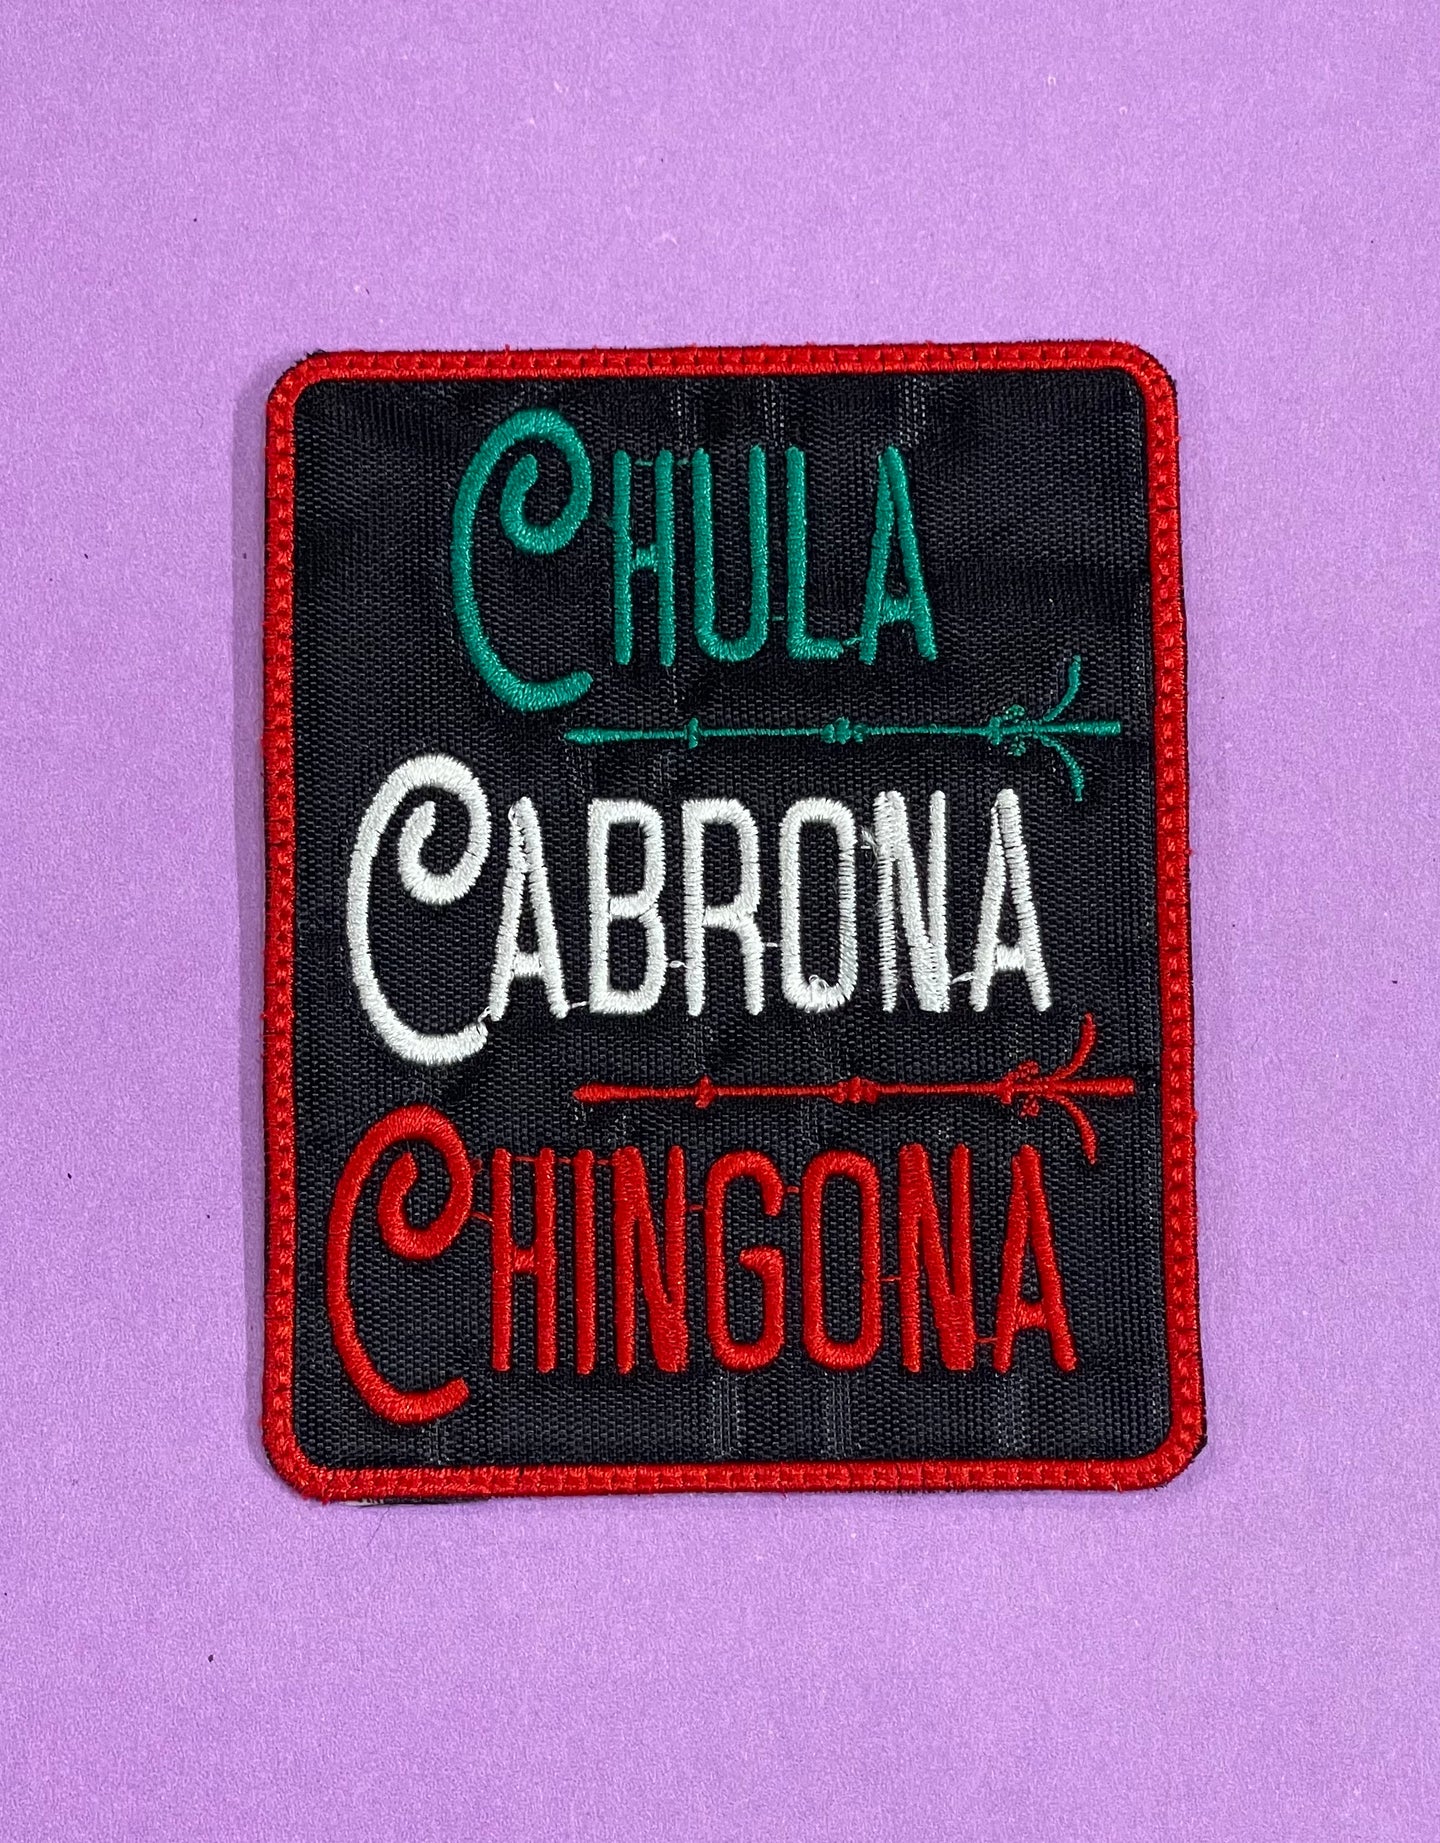 Chula Cabrona Chingona Patch